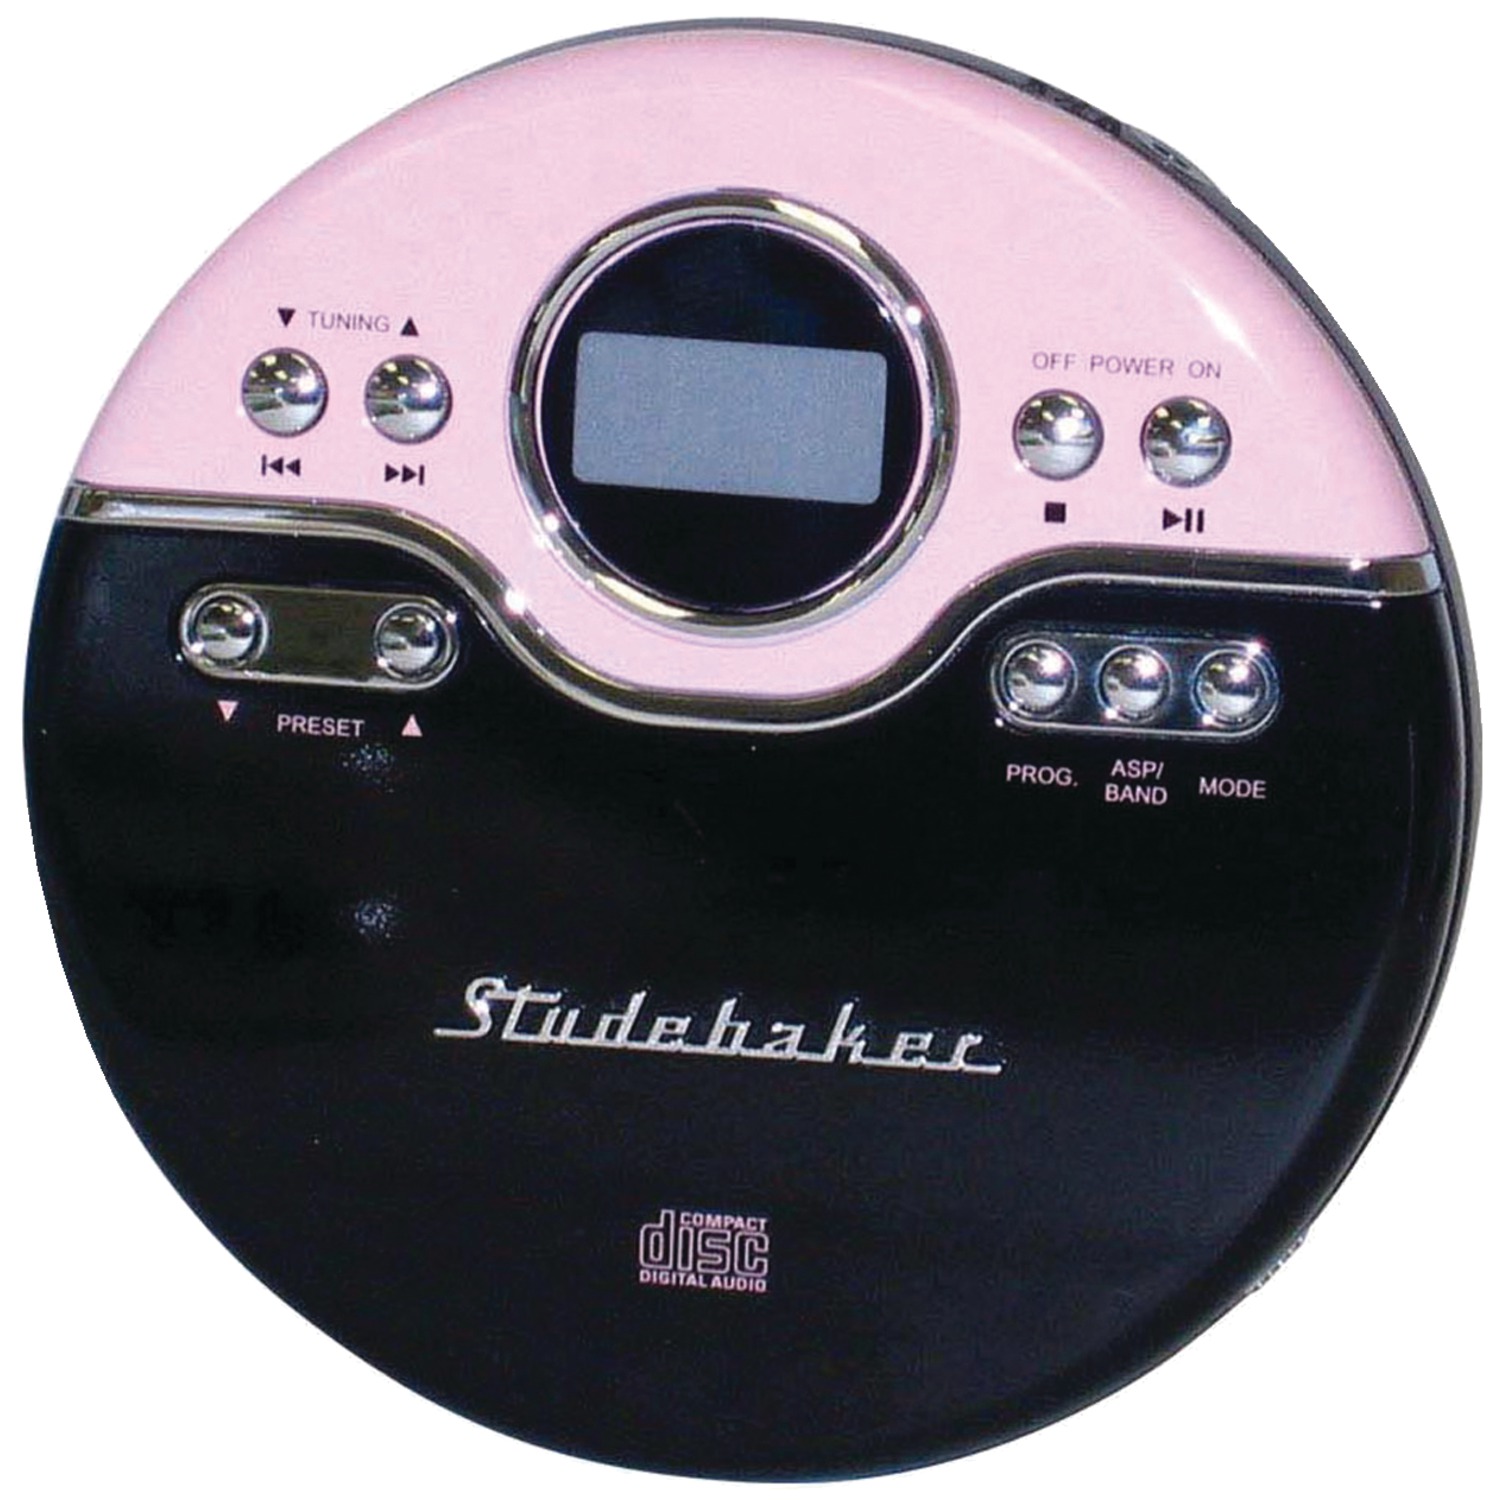 Studebaker Sb3703pb Personal Jogging Cd Player with Fm Pll Radio (Pink/Black) - image 1 of 4